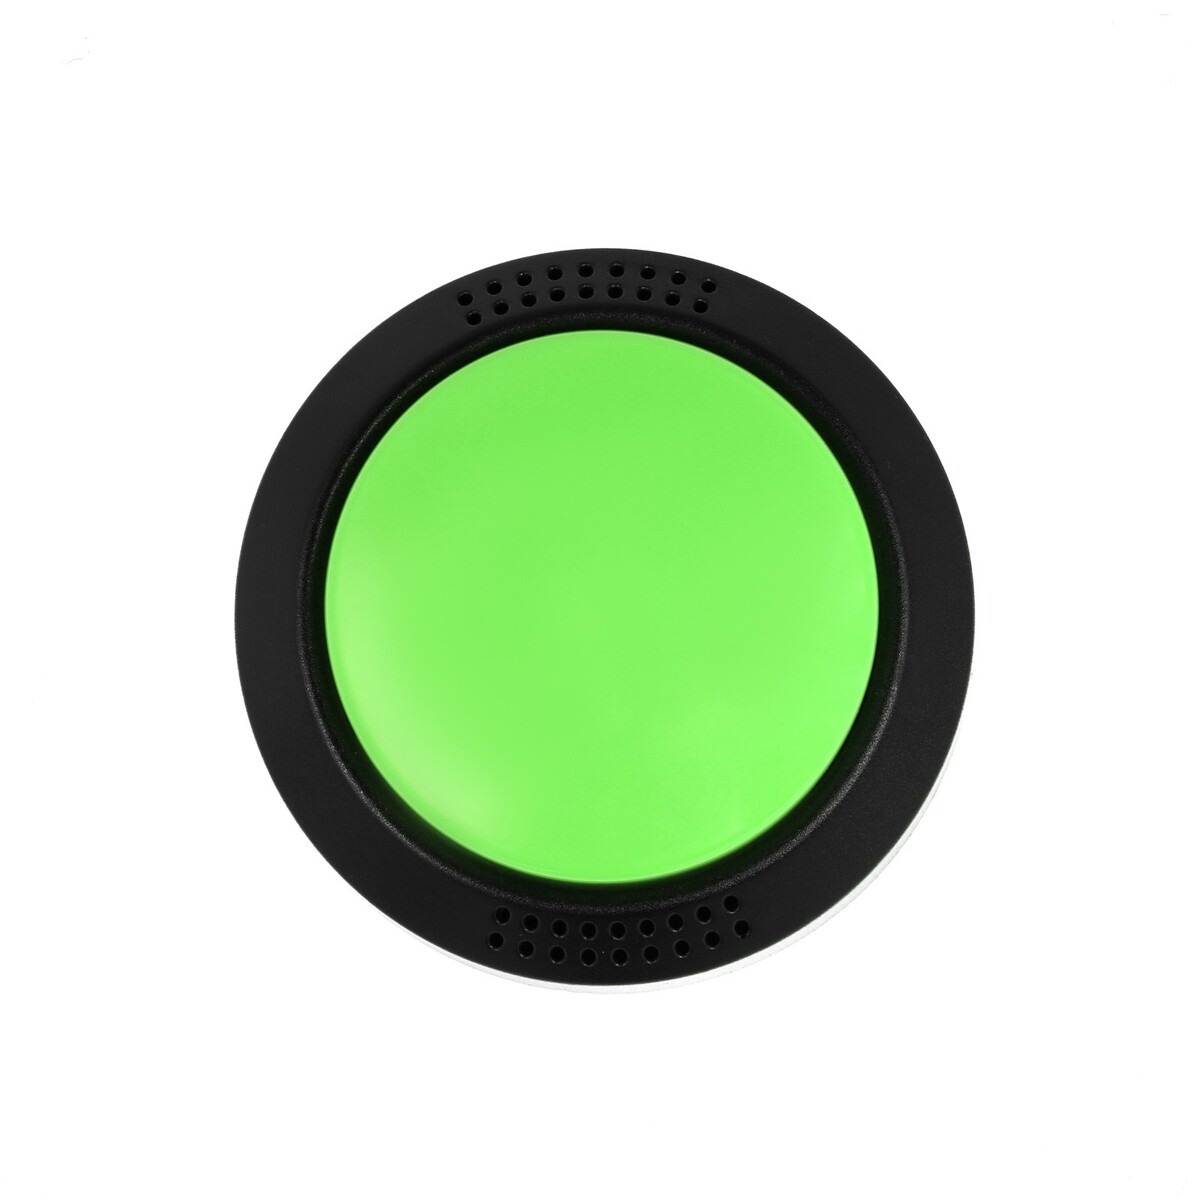 фото Кнопка для игр, 2 ааа, 8.9 х 4.2 см, зеленая no brand